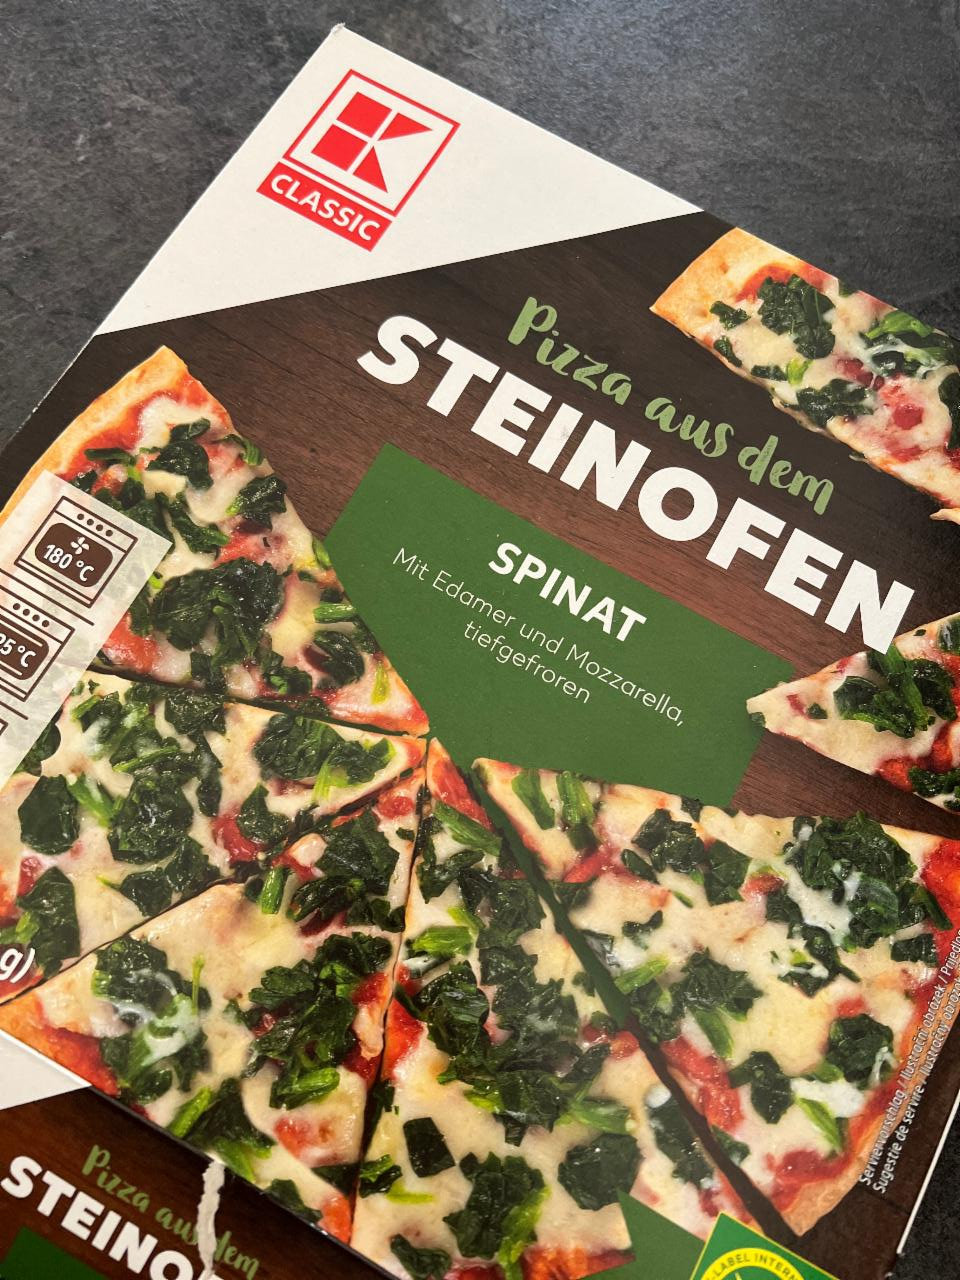 Fotografie - Steinofen pizza spinat K-Classic